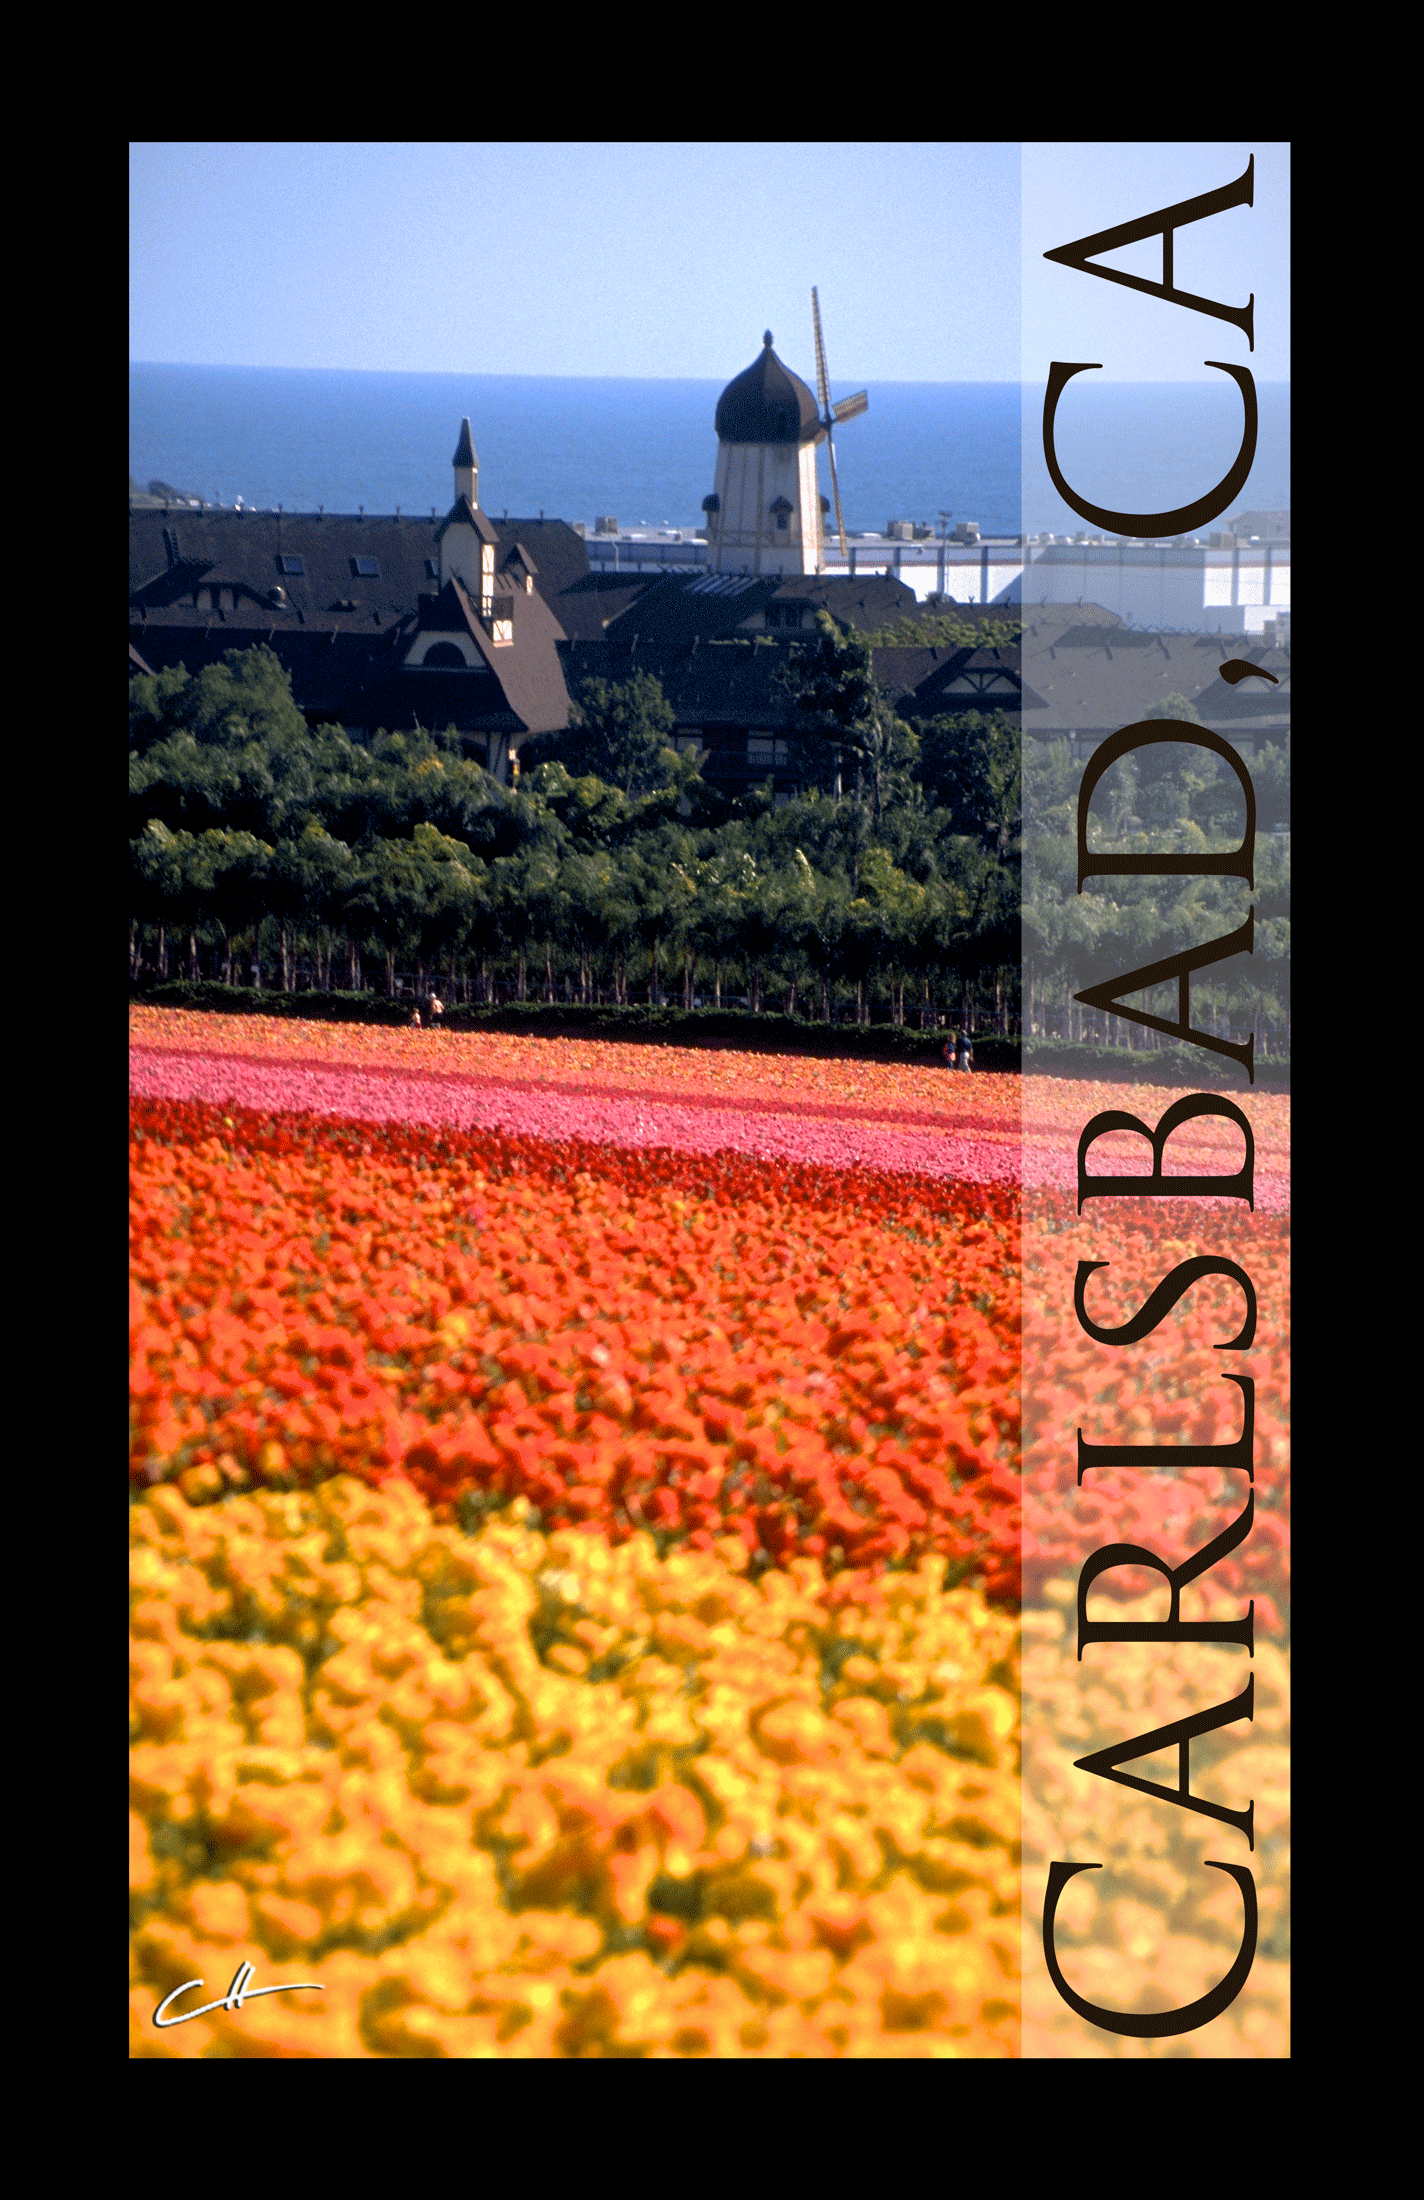 Carlsbad Flower Fields - poster by David Crellen